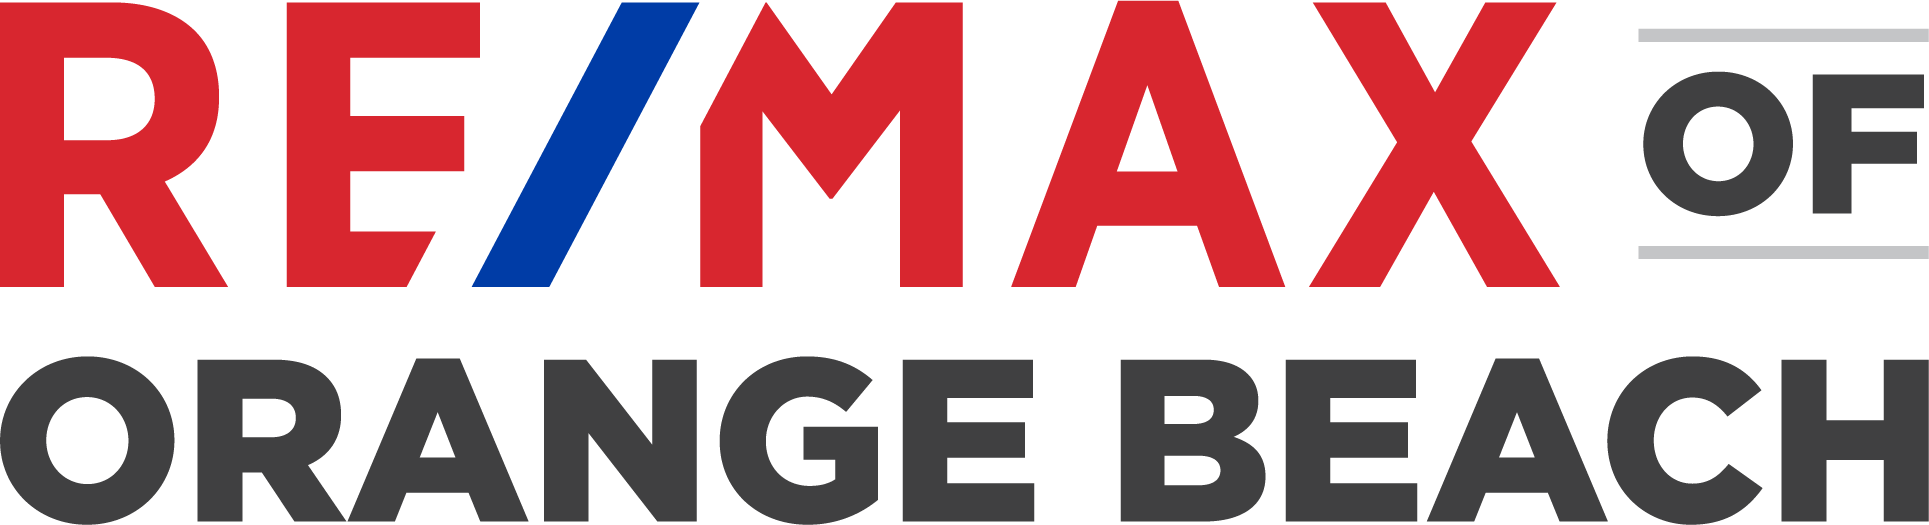 remax-logo